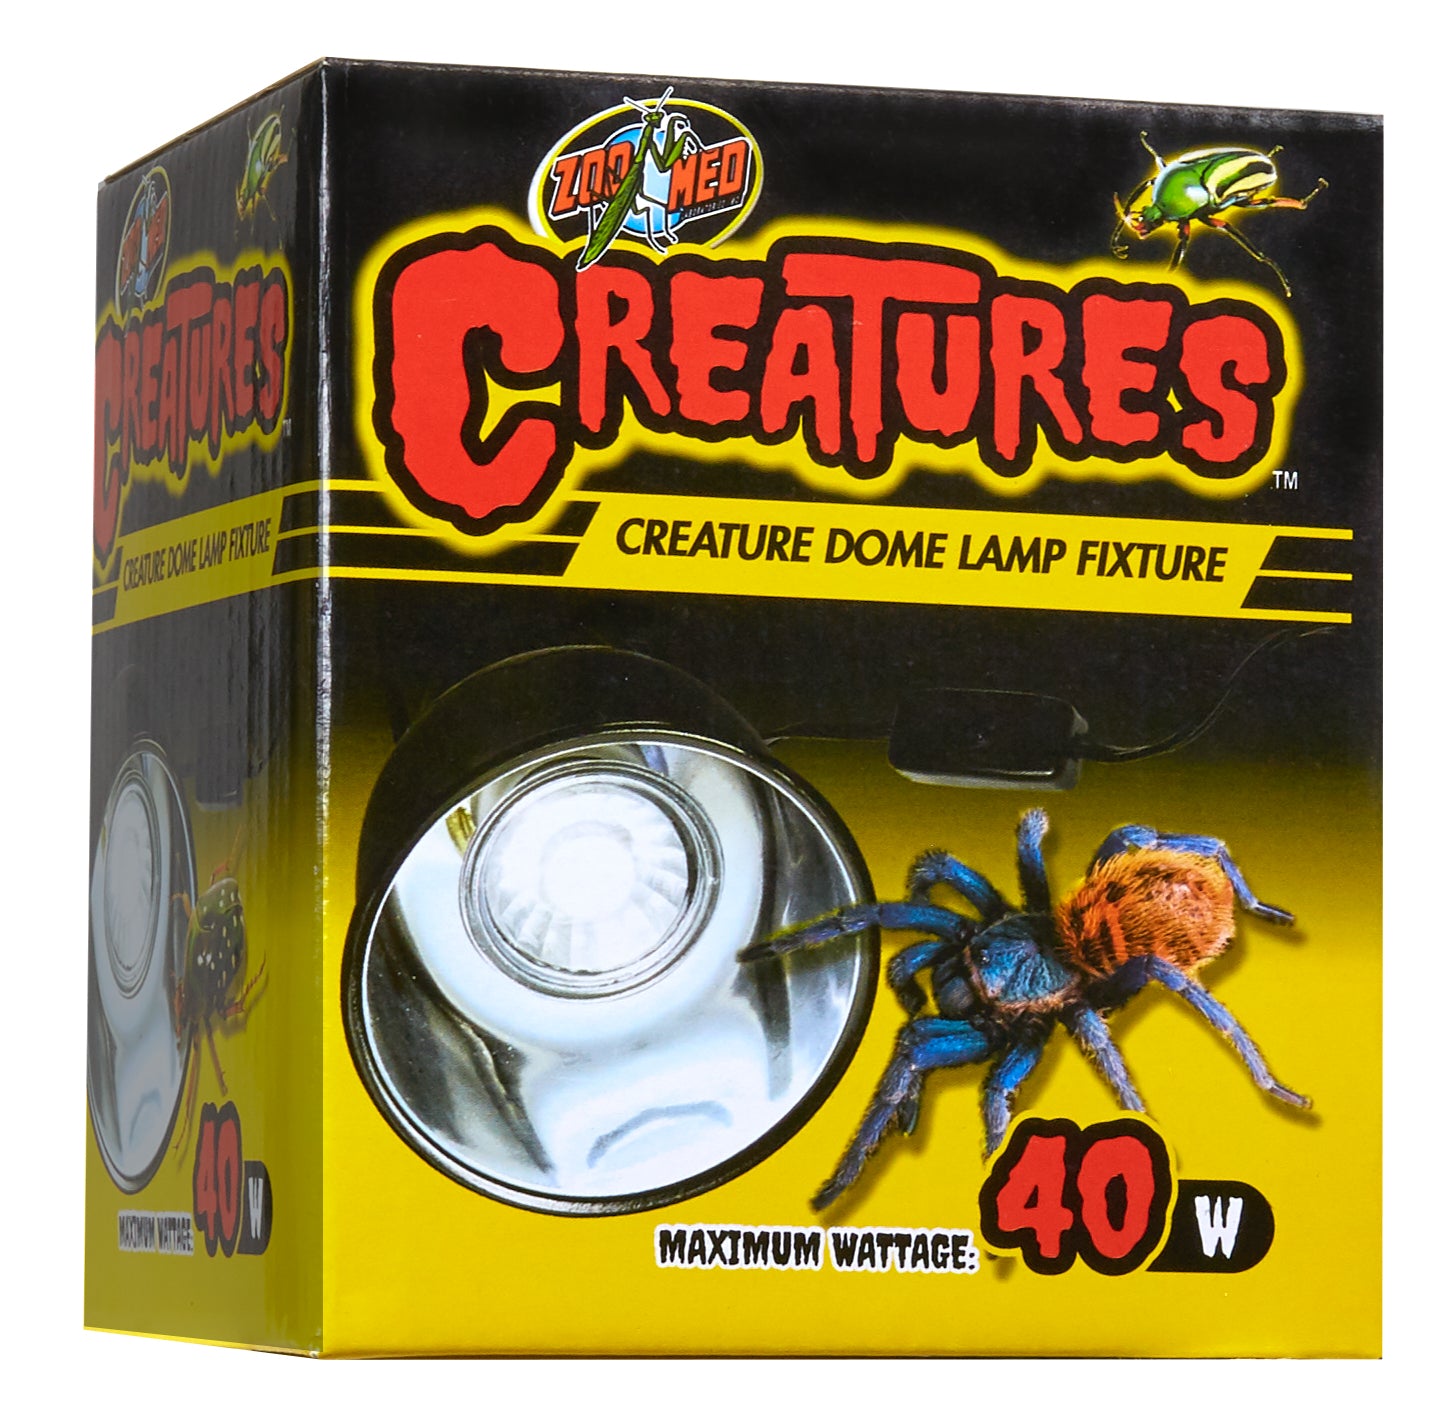 Zoo Med Creatures Creature Dome Lamp Fixture. Maximum wattage: 40w